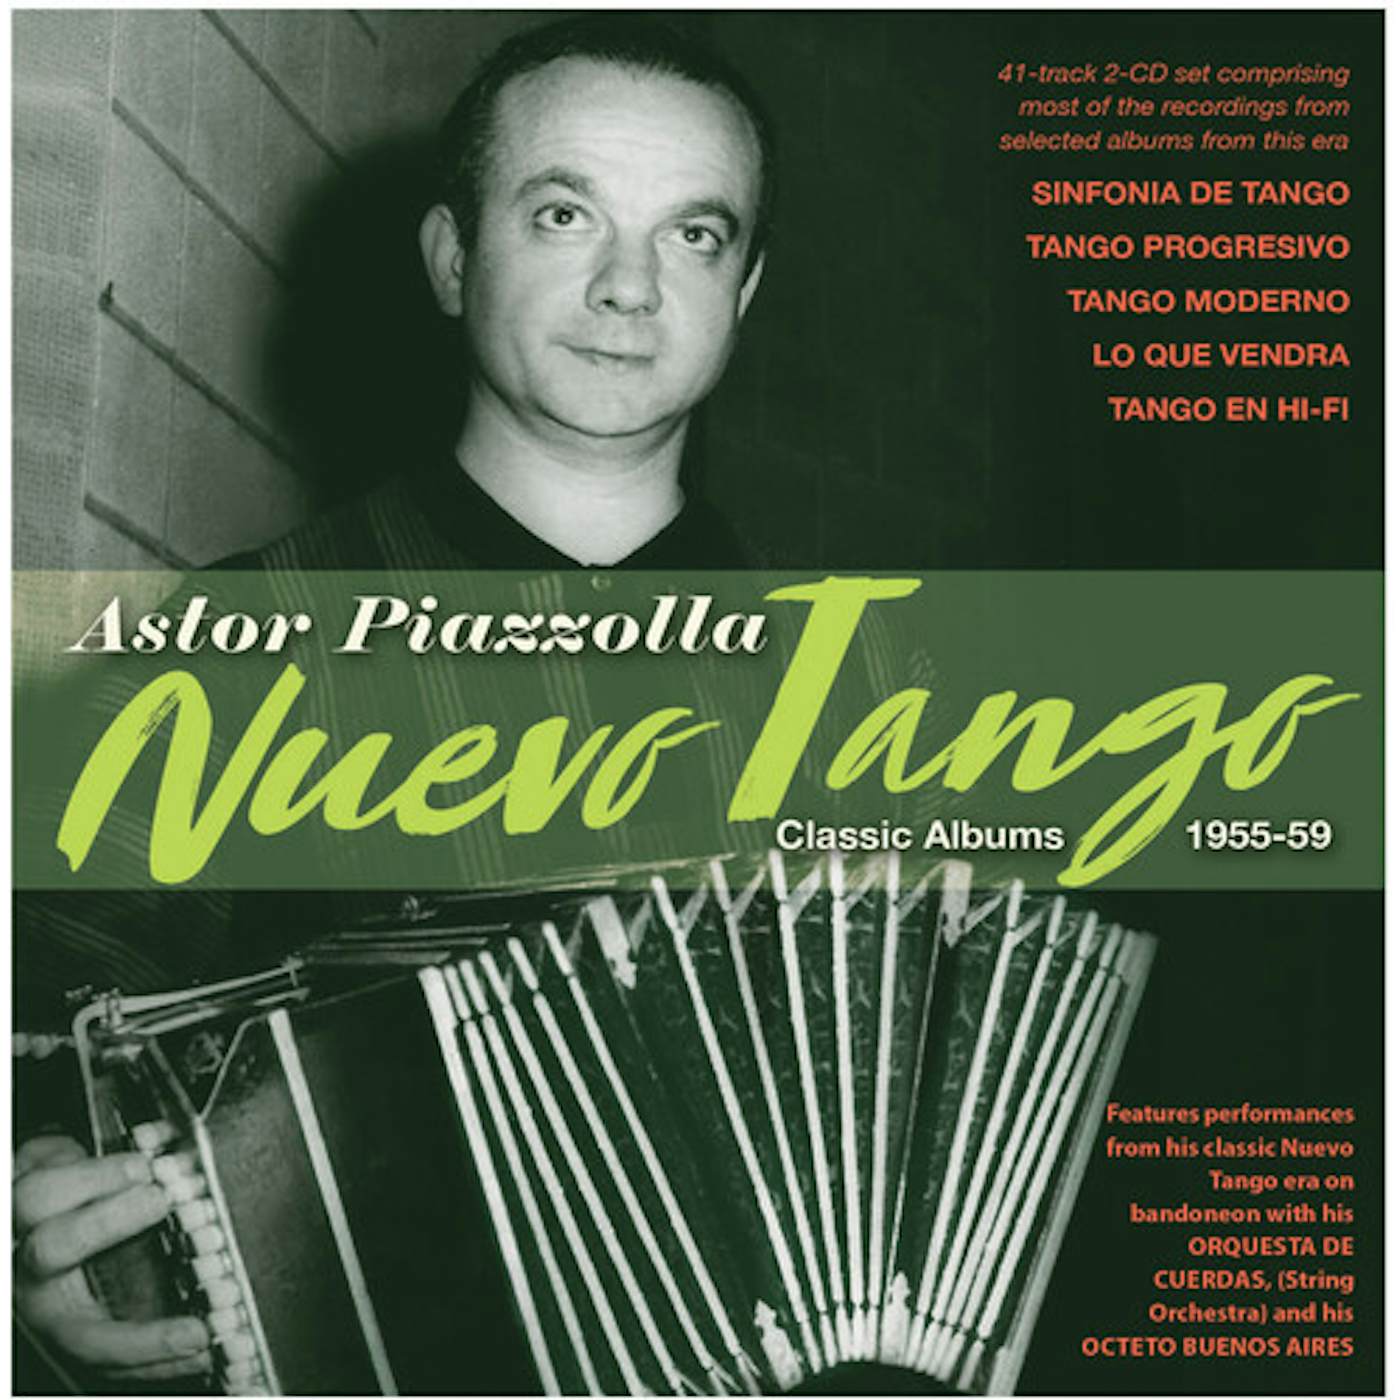 Astor Piazzolla NUEVO TANGO: CLASSIC ALBUMS 1955-59 CD